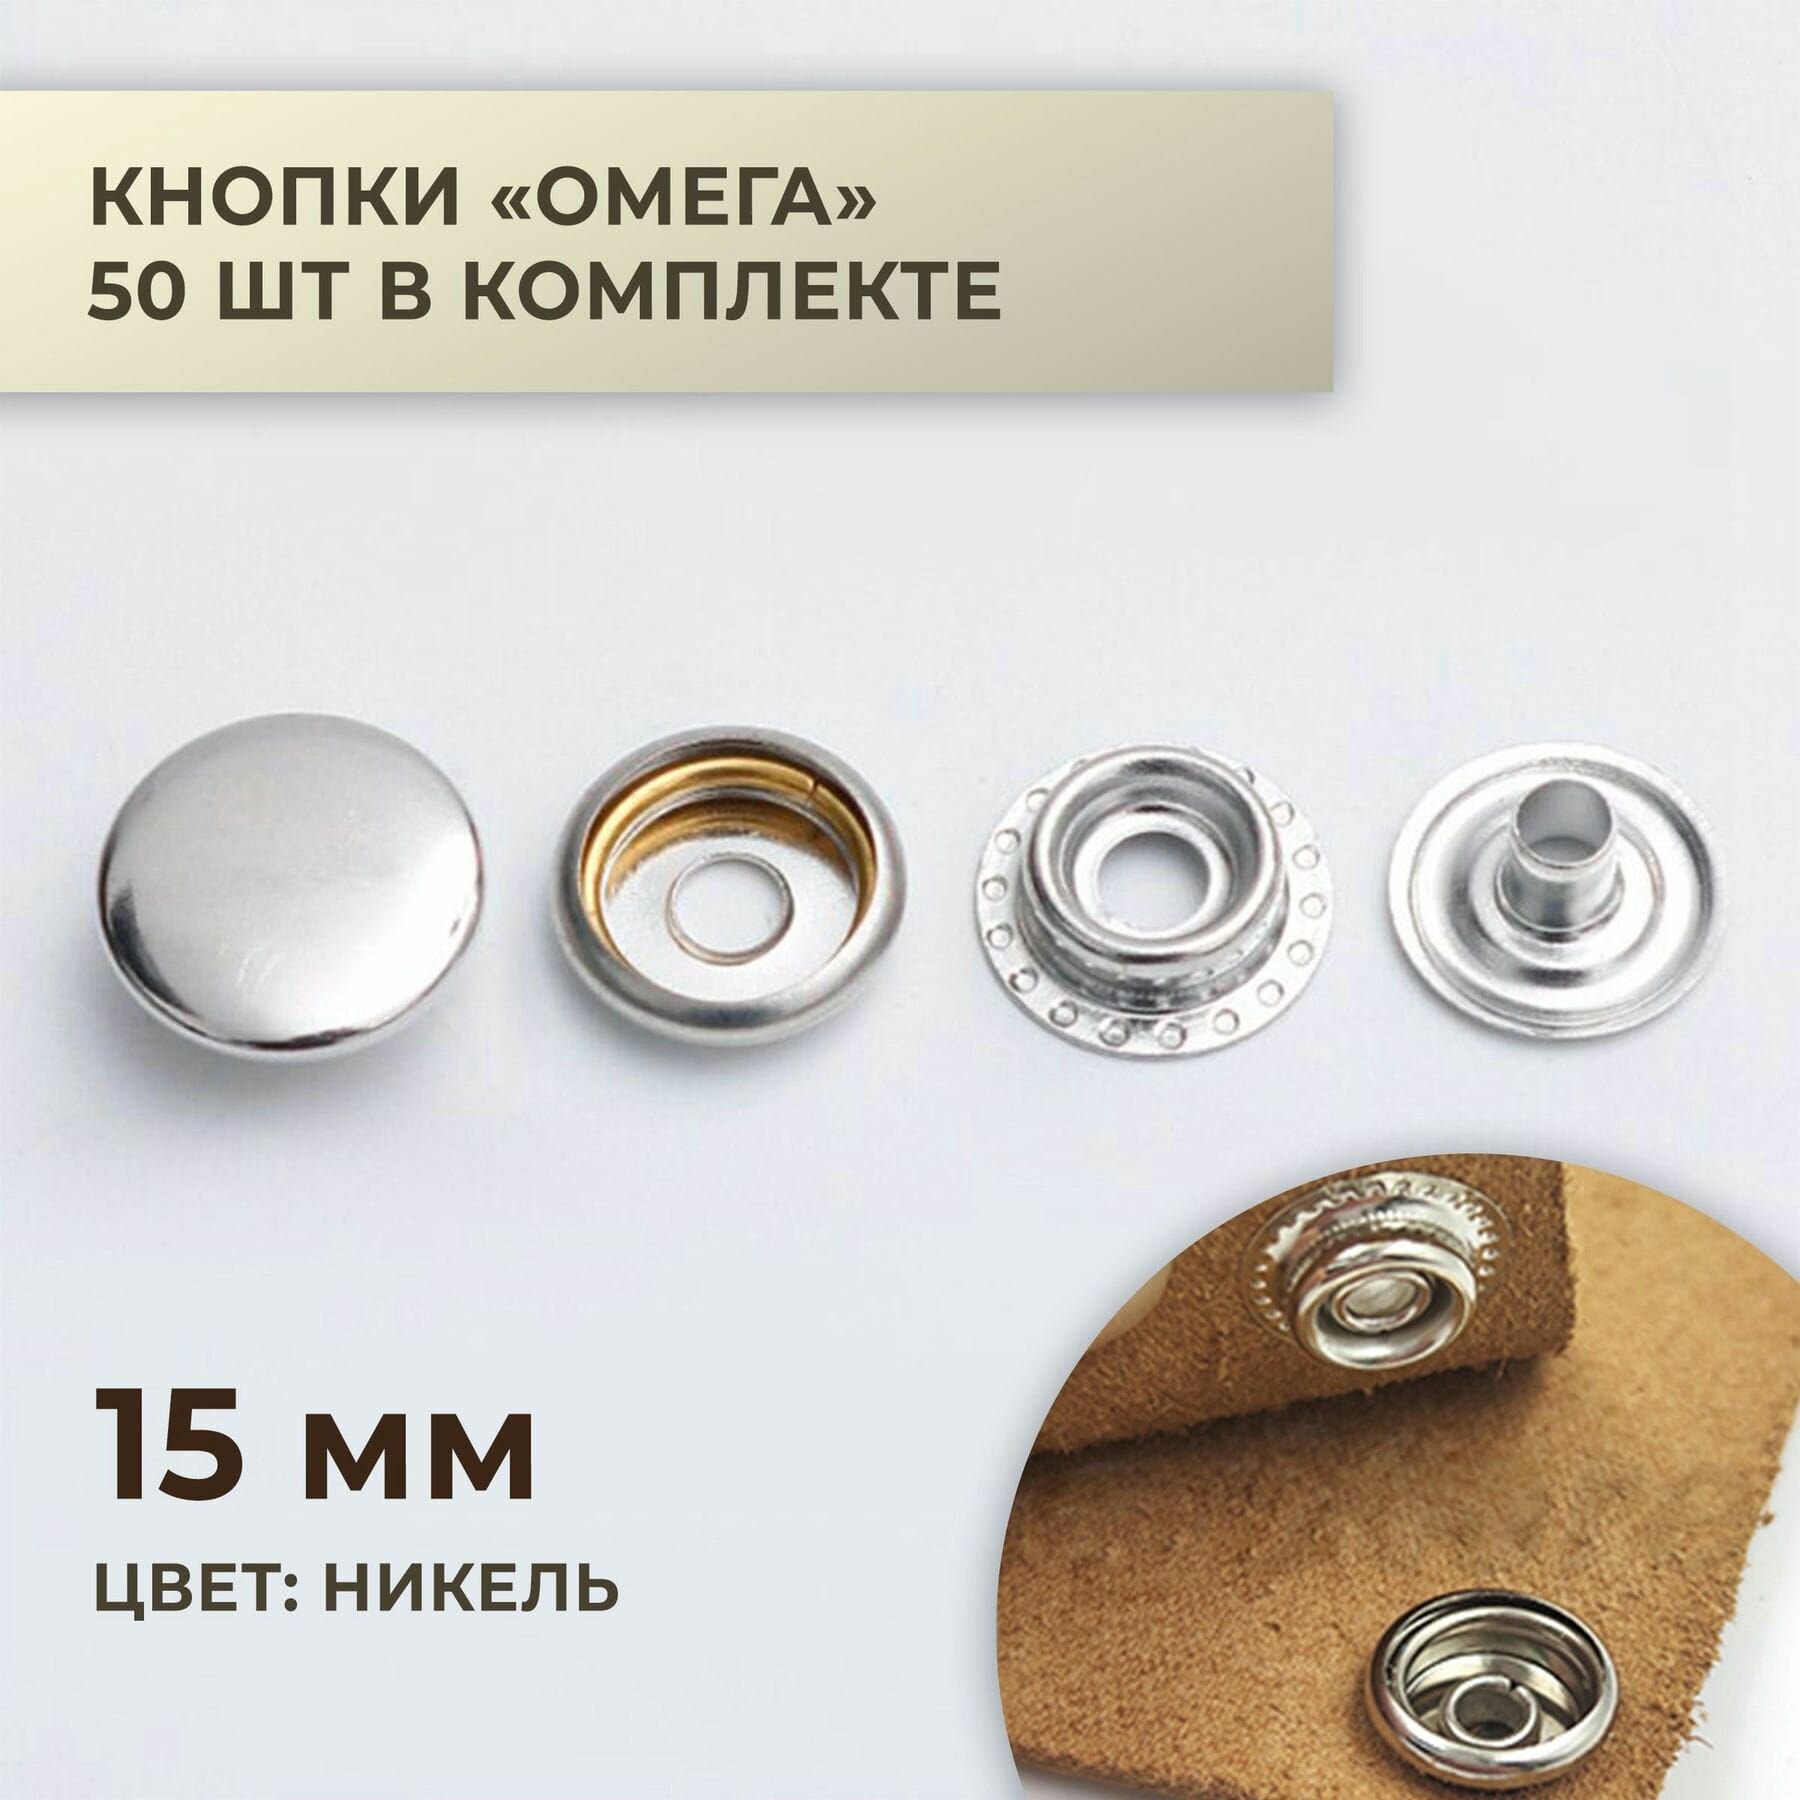 Кнопки "Омега", 15 мм, никель, 50 шт